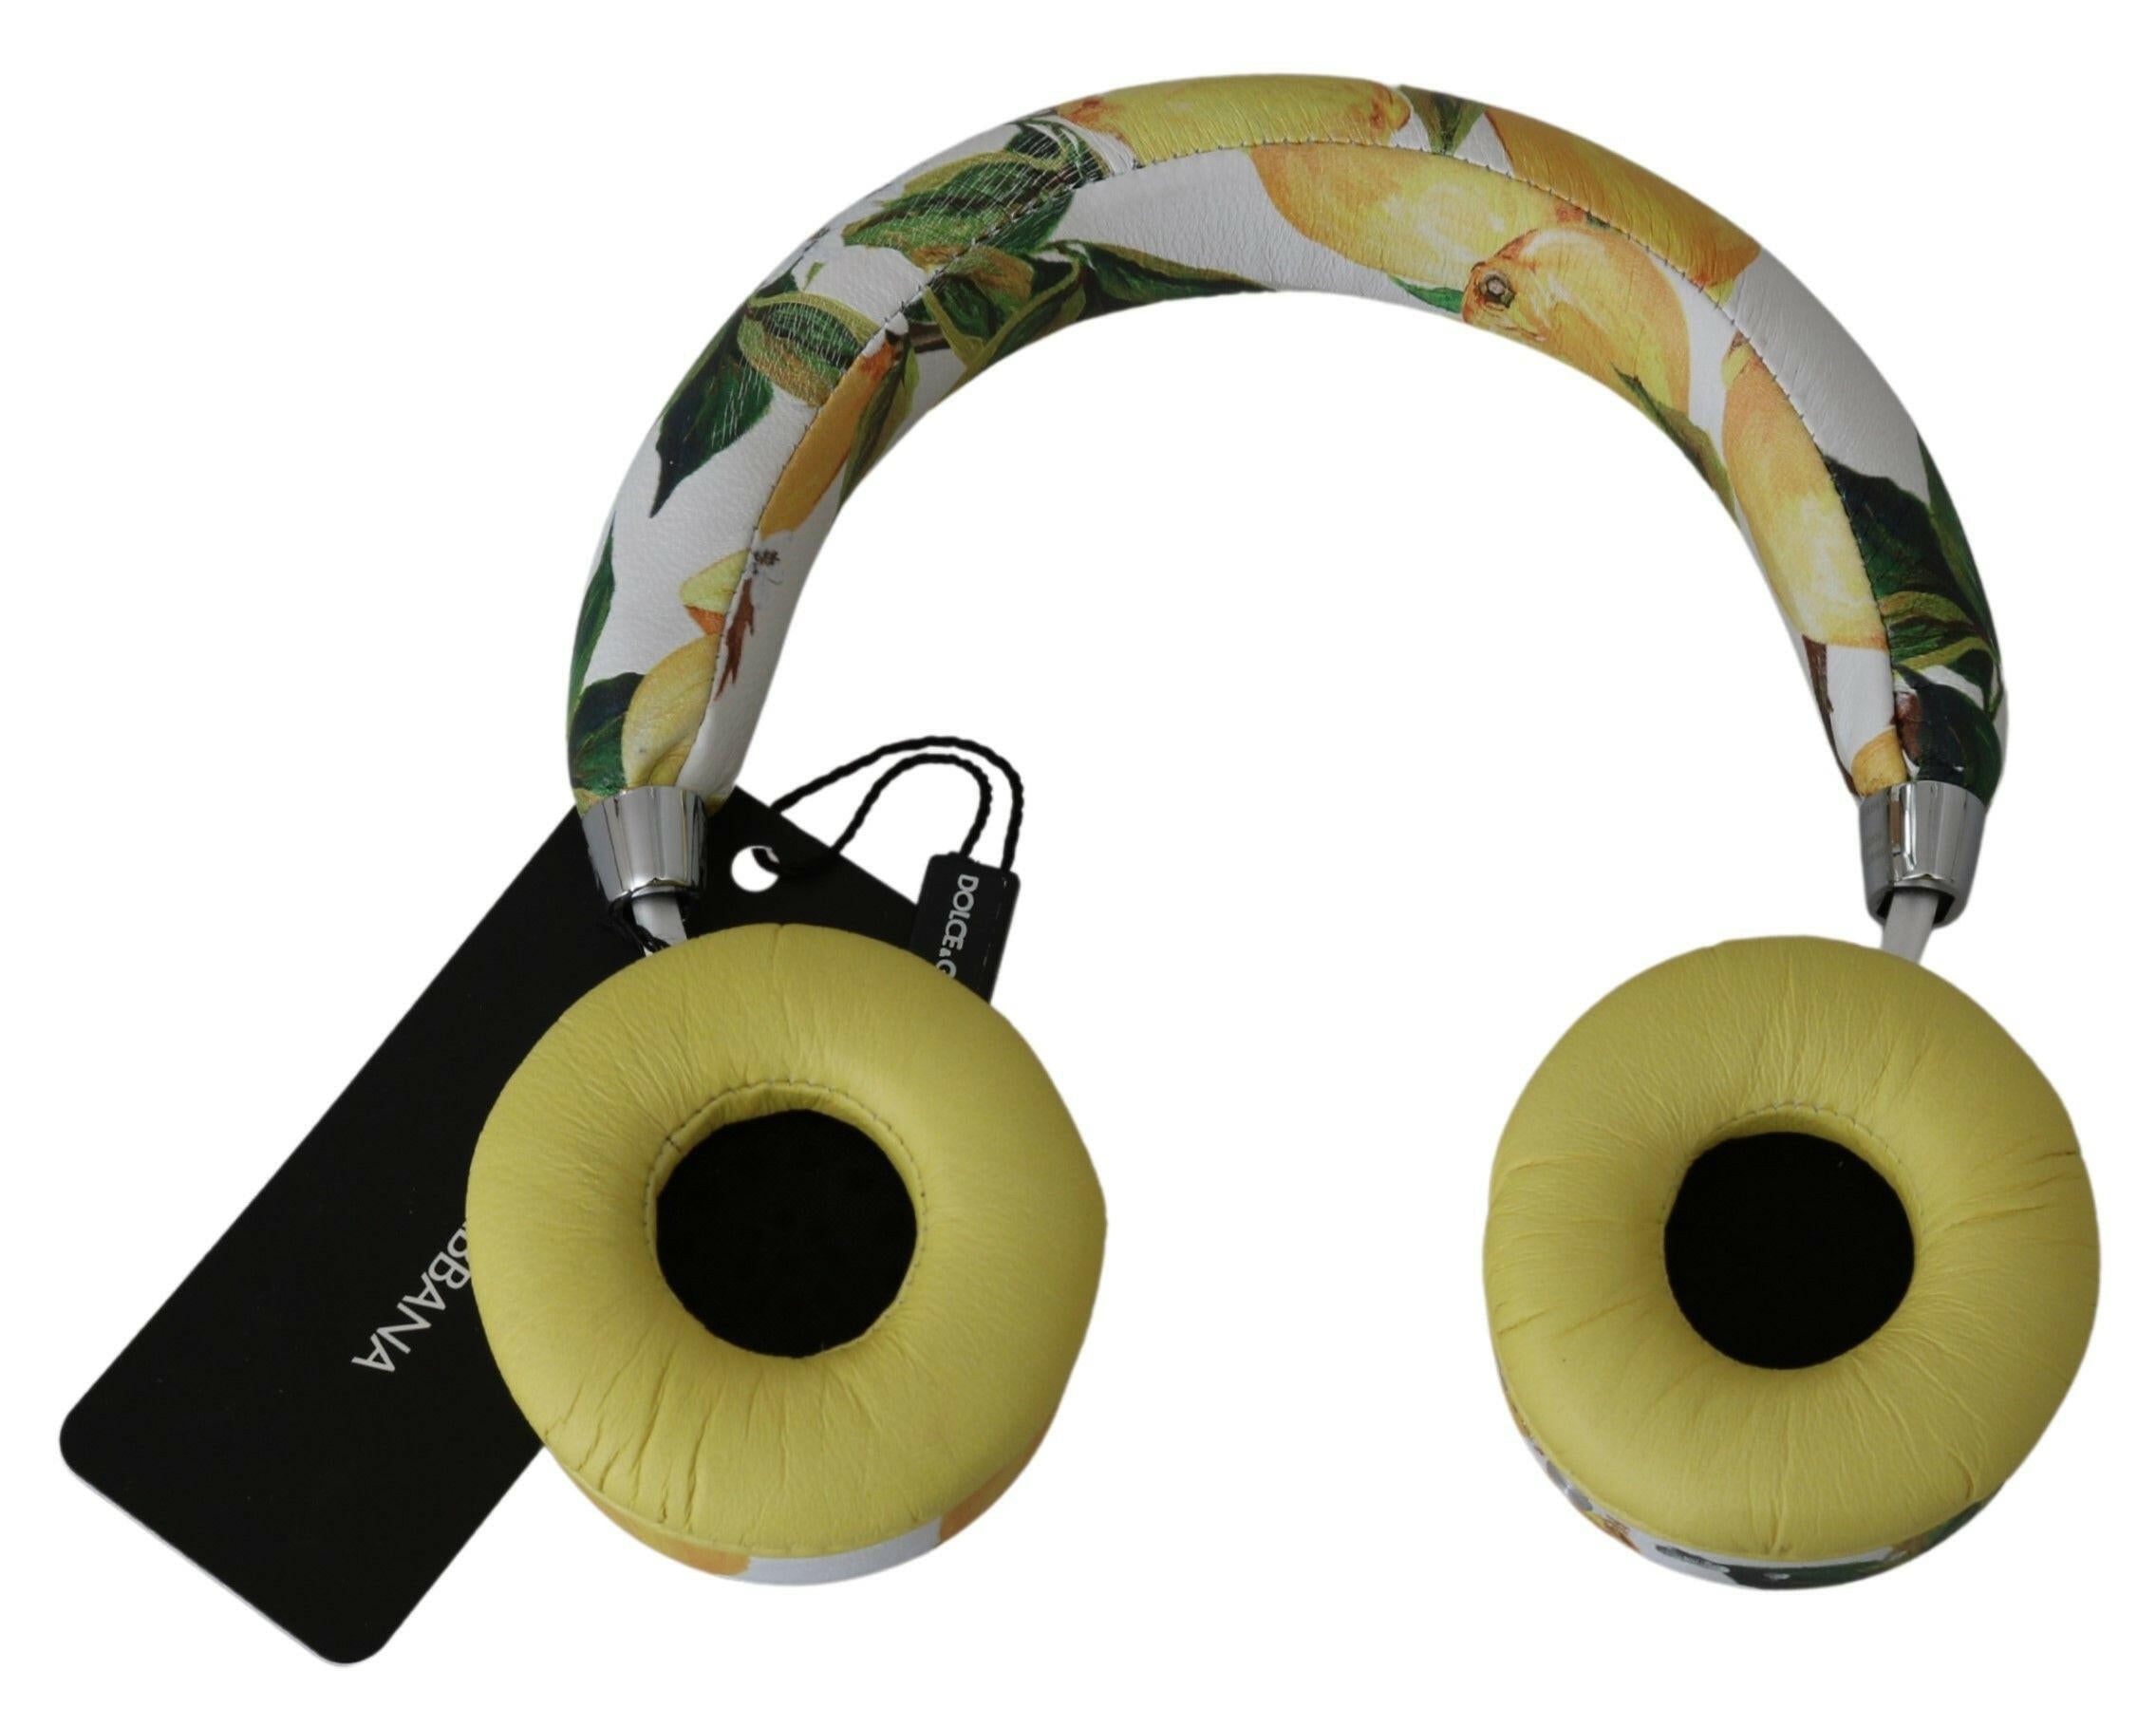 Dolce & Gabbana White Yellow Lemon Print Headset Headphones - GENUINE AUTHENTIC BRAND LLC  